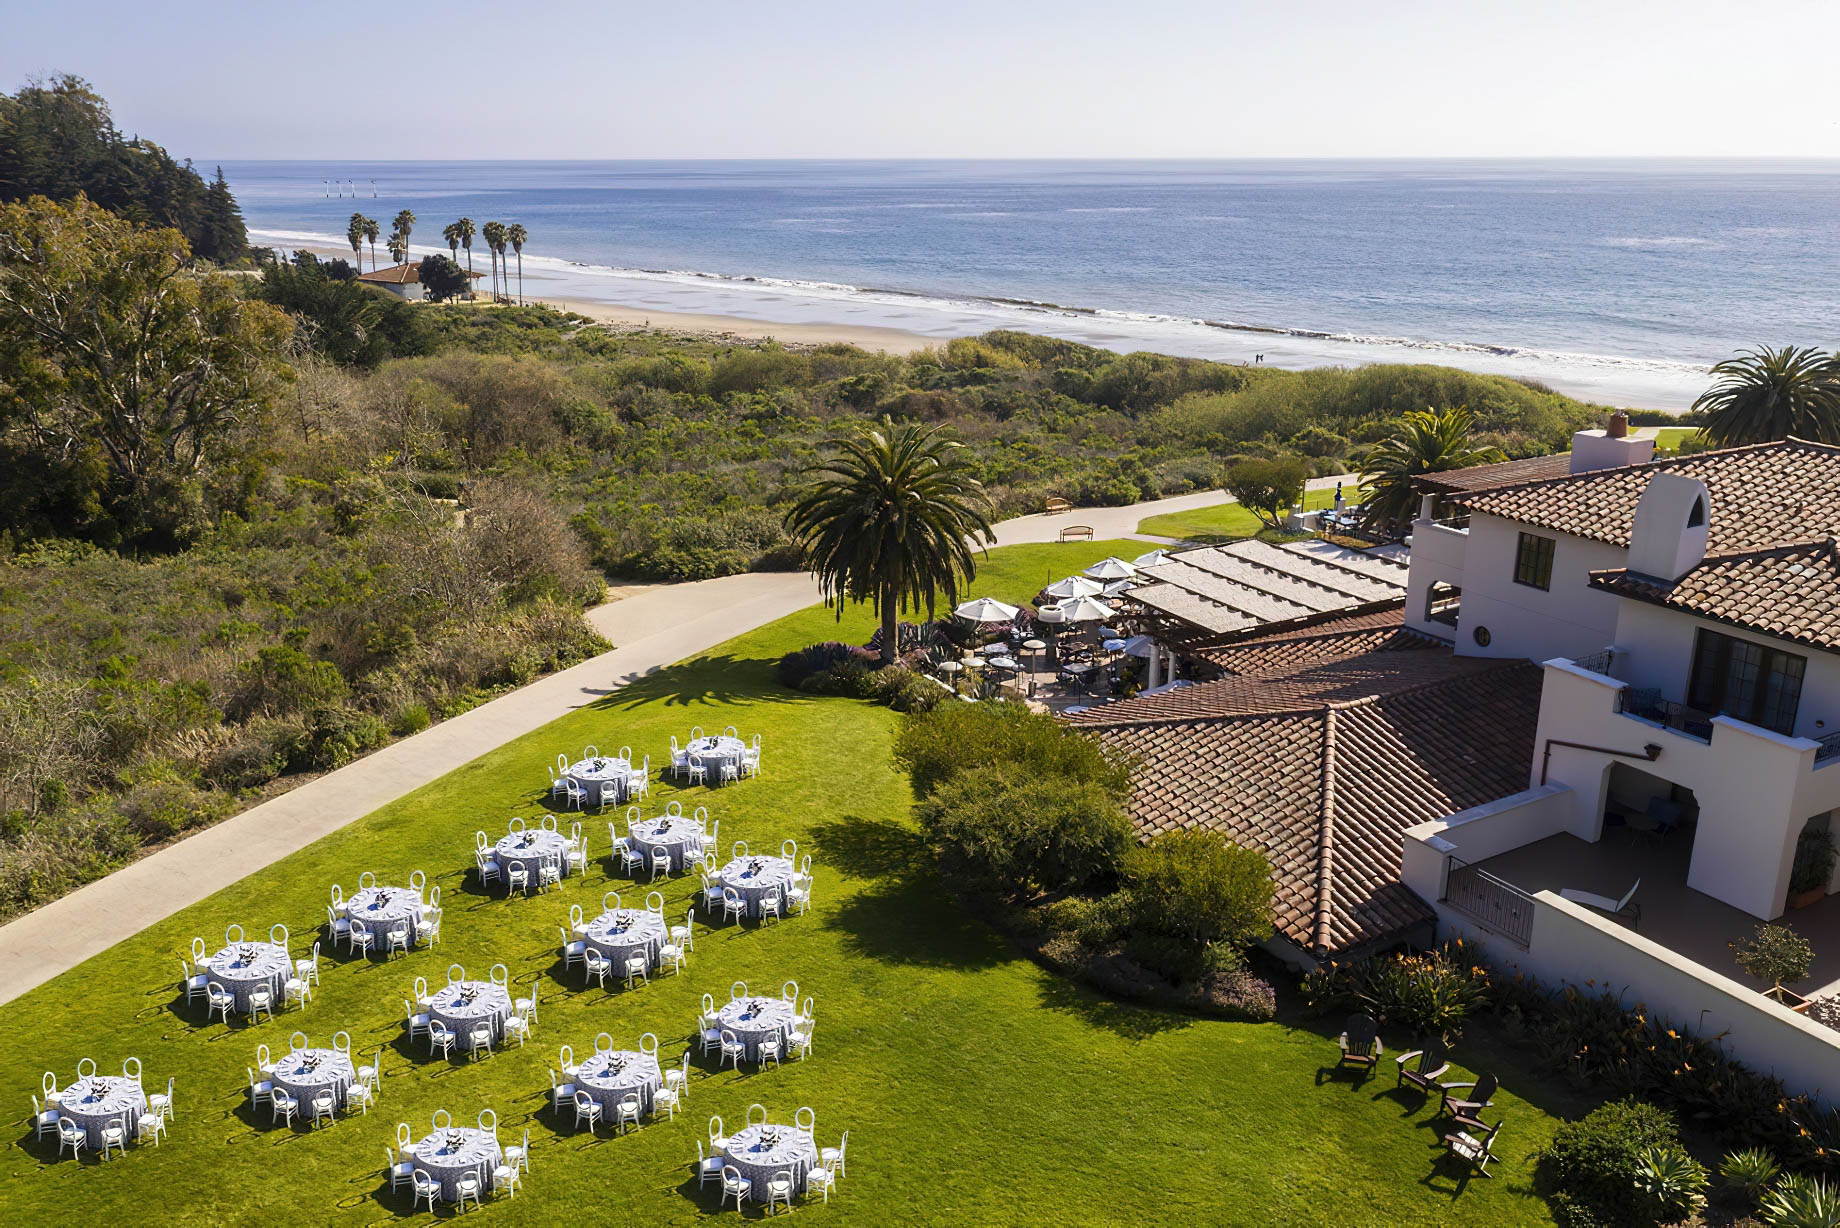 The Ritz-Carlton Bacara, Santa Barbara Resort - Santa Barbara, CA, USA - Lawn Wedding Reception Aerial